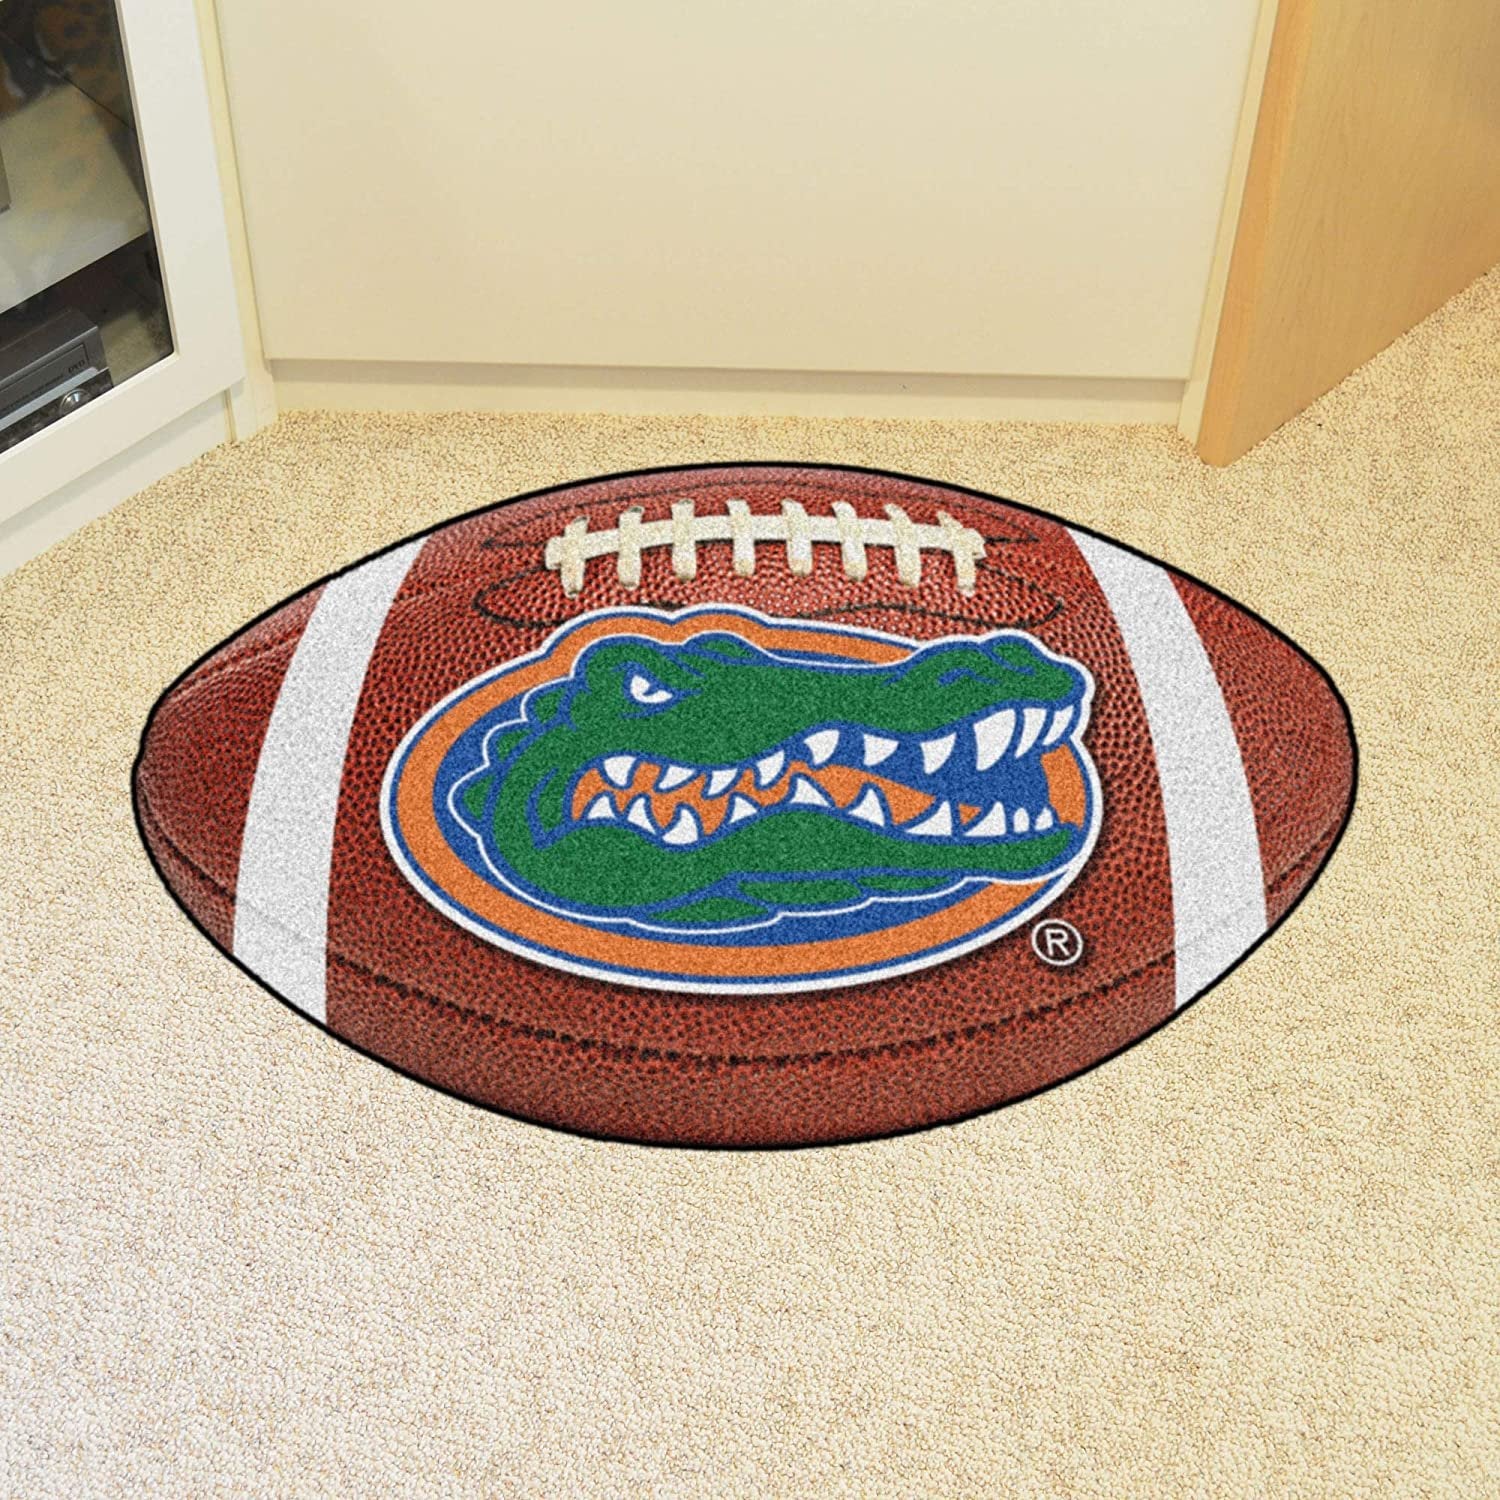 University of Florida Gators Floor Mat Area Rug, 20x32 Inch, Non-Skid Backing, Football Design